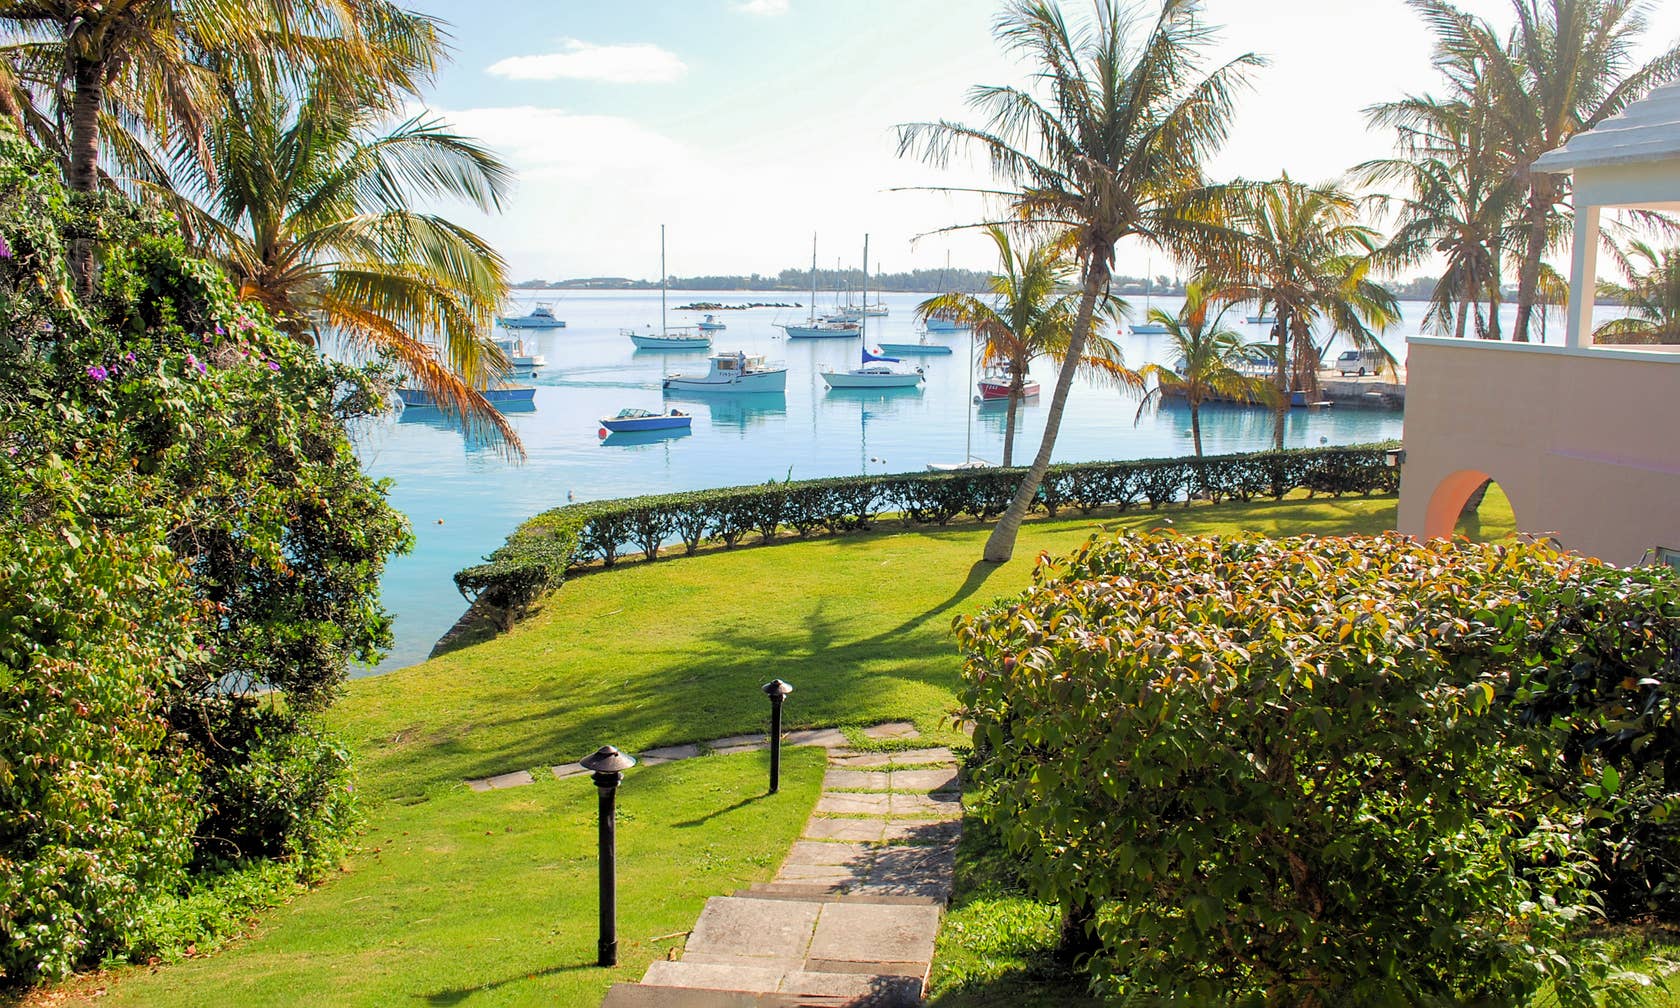 Bérbeadó nyaralók itt: Bermuda